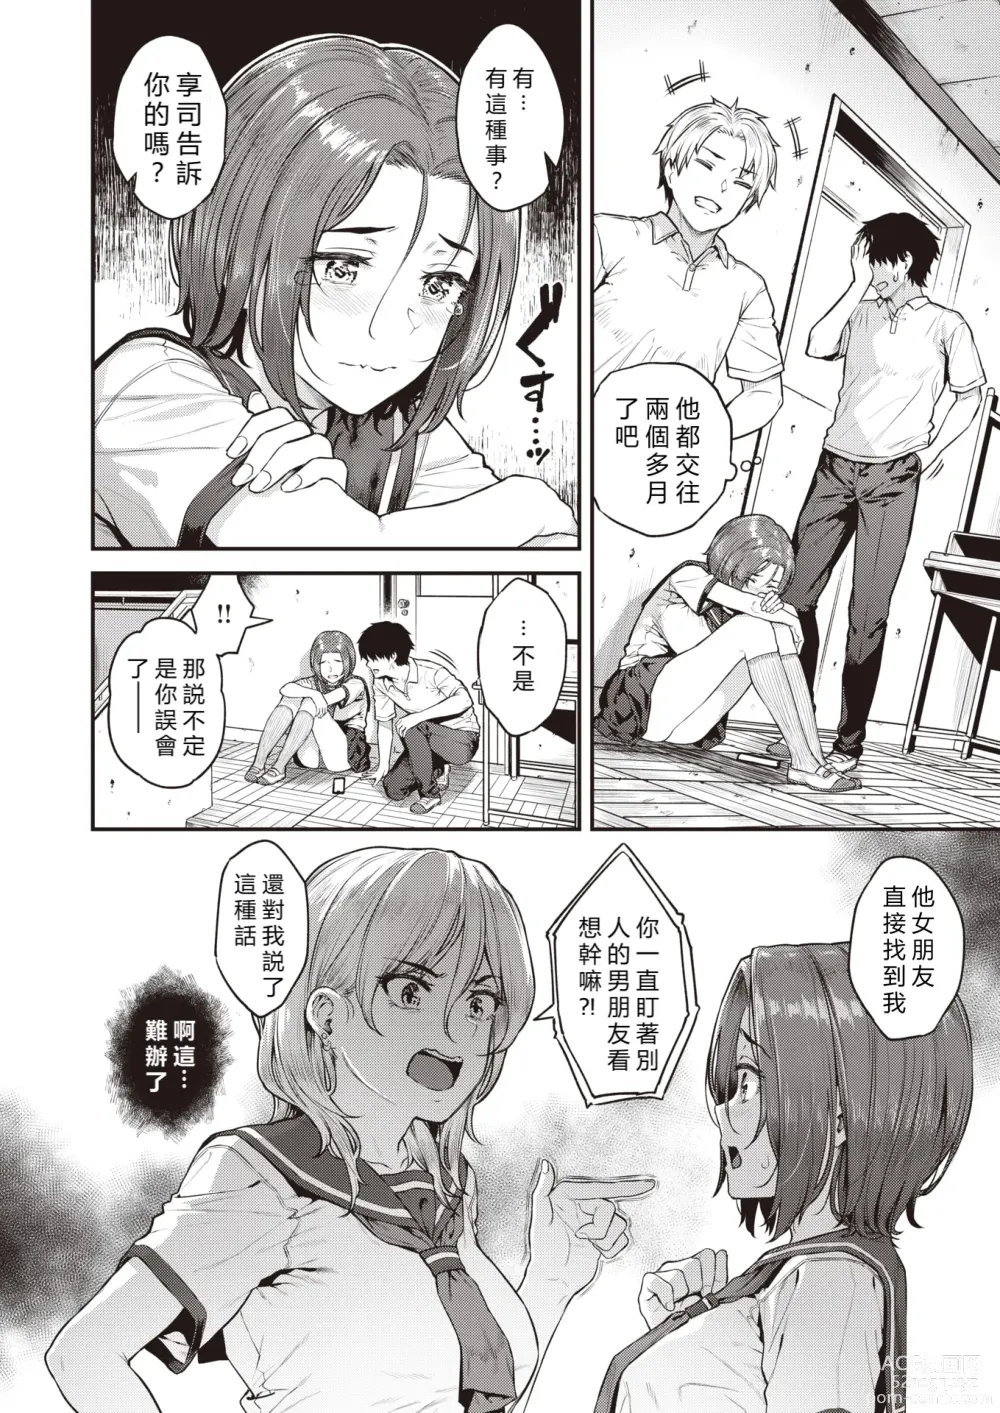 Page 2 of manga Shituren Ookami